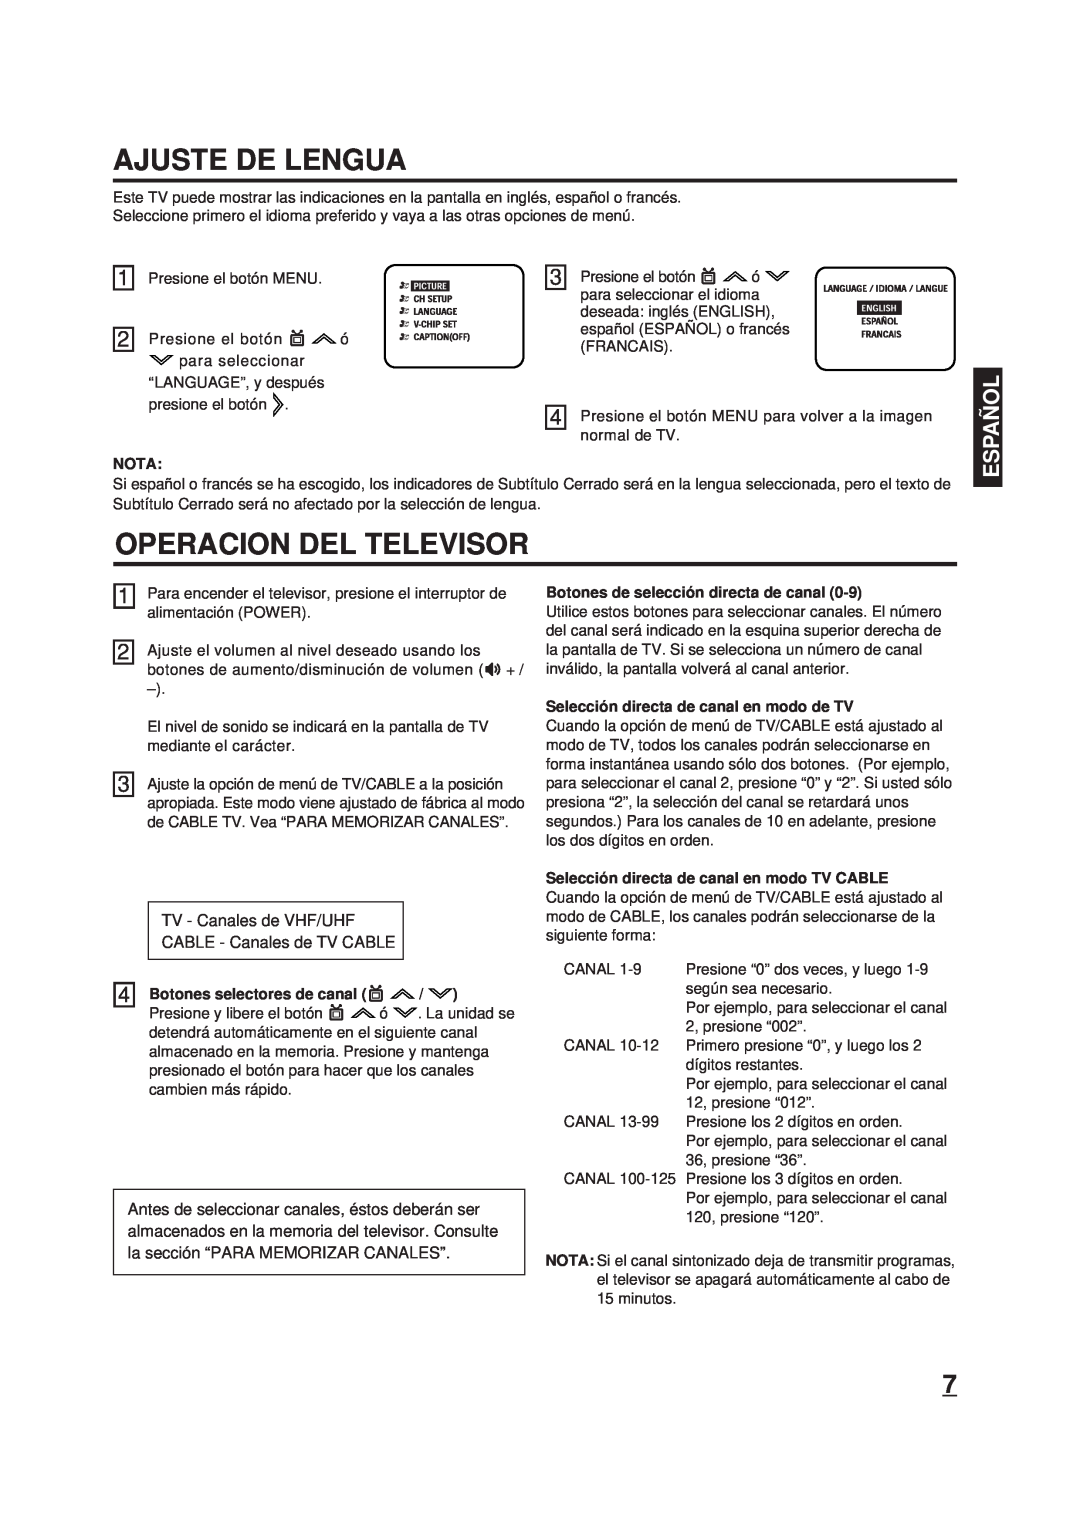 Memorex DT1900-C Ajuste De Lengua, Operacion Del Televisor, TV - Canales de VHF/UHF CABLE - Canales de TV CABLE, Españ Ol 